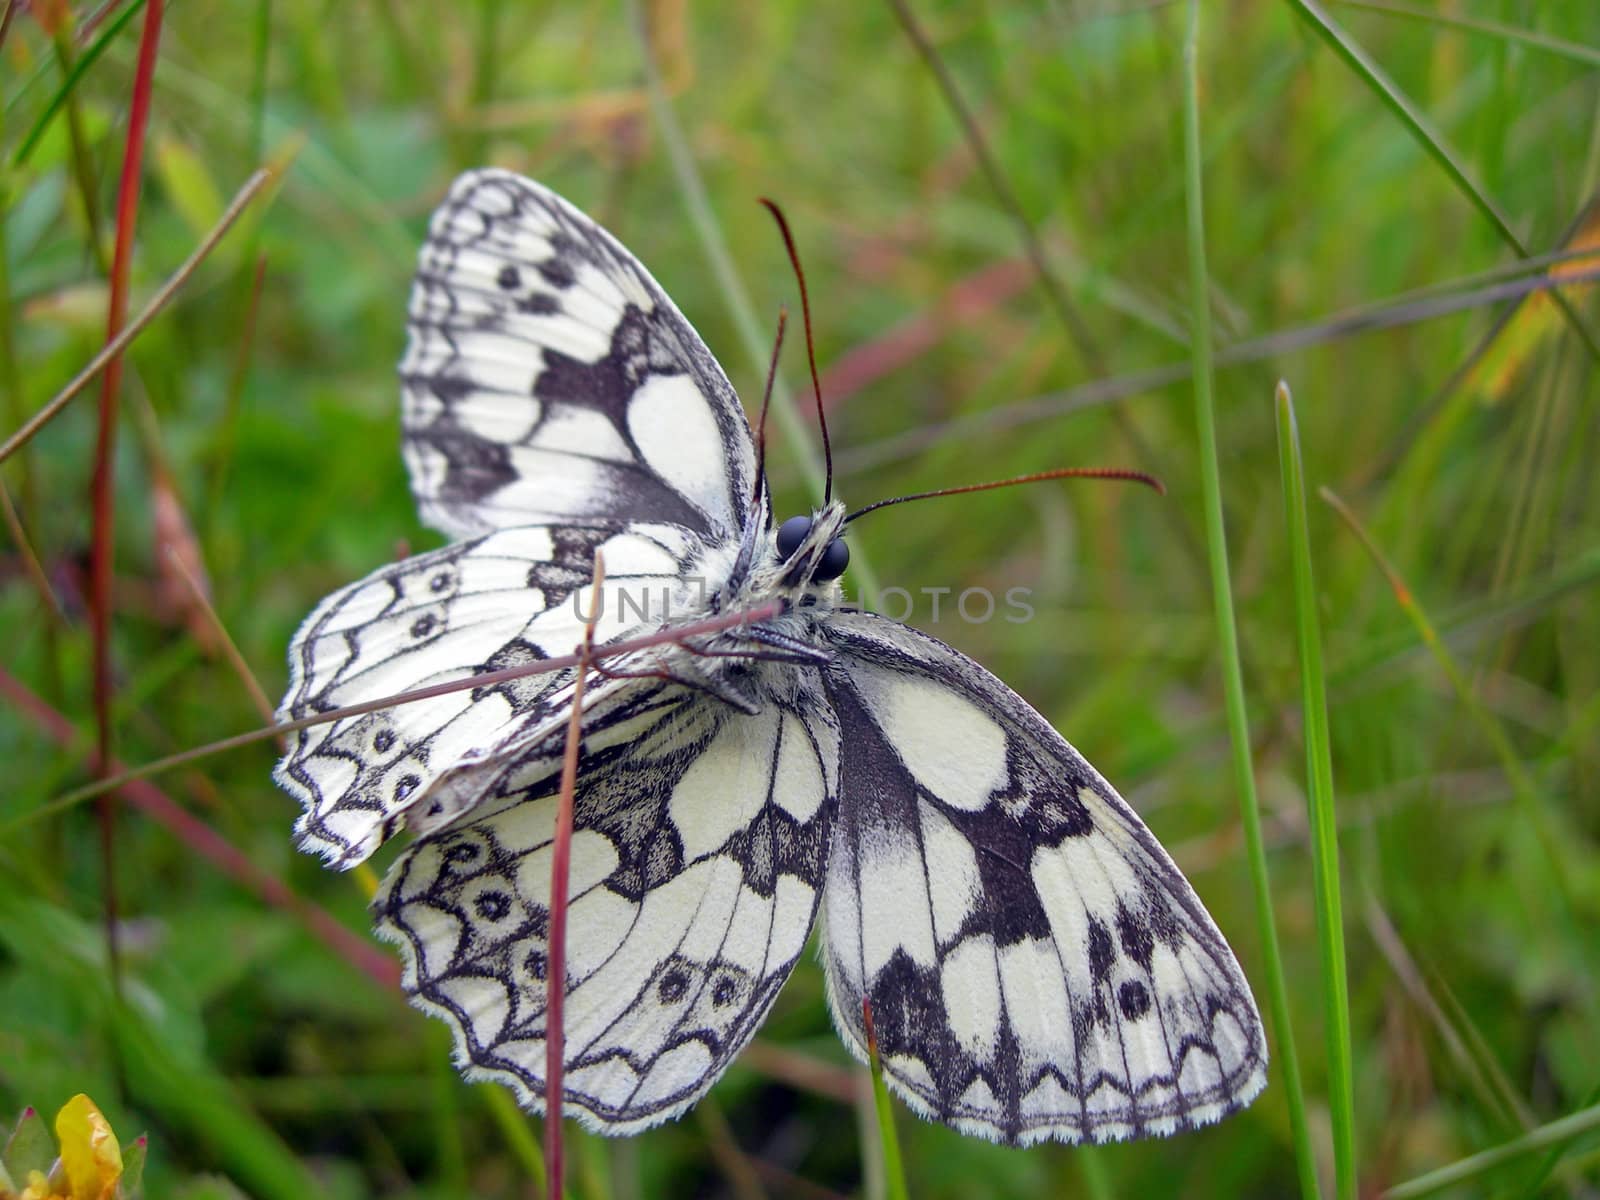 Butterfly on stalk by drakodav